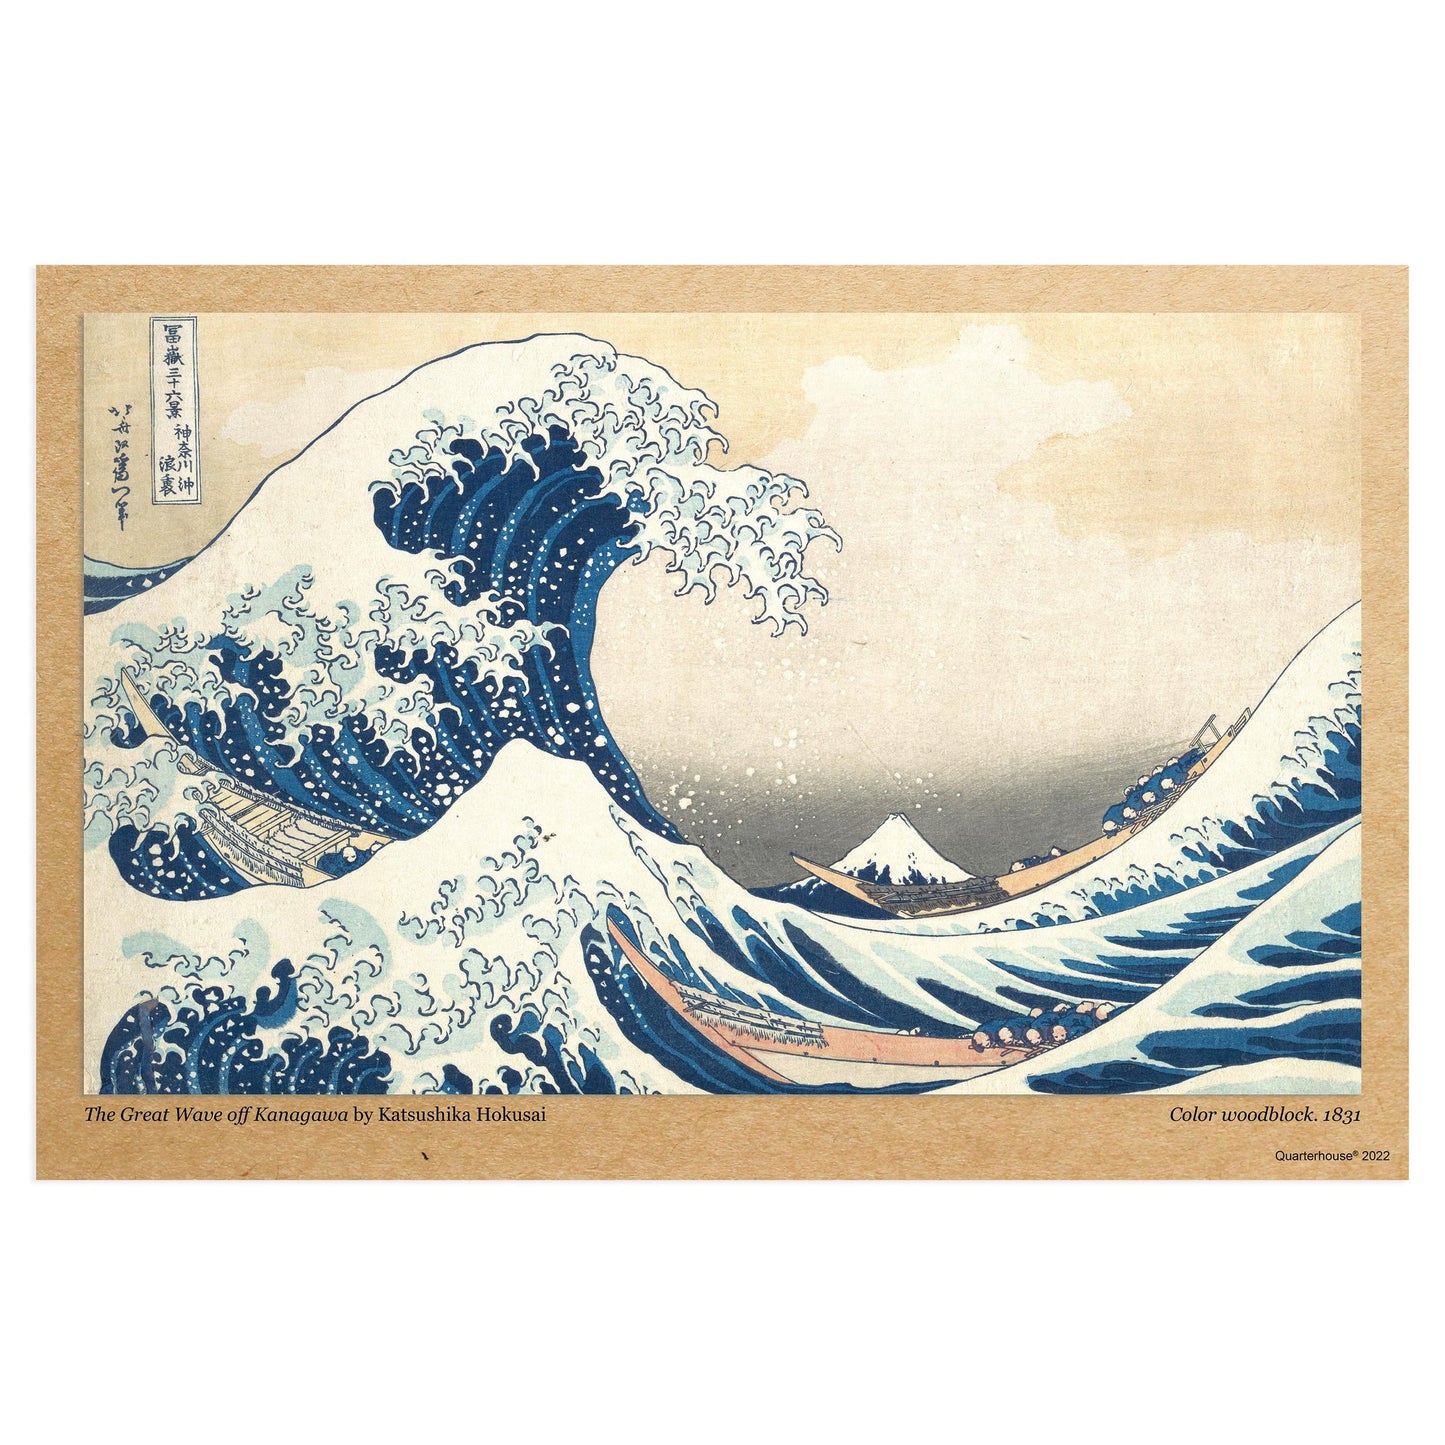 Quarterhouse 'The Great Wave off Kanagawa' Poster, Art History Classroom Materials for Teachers